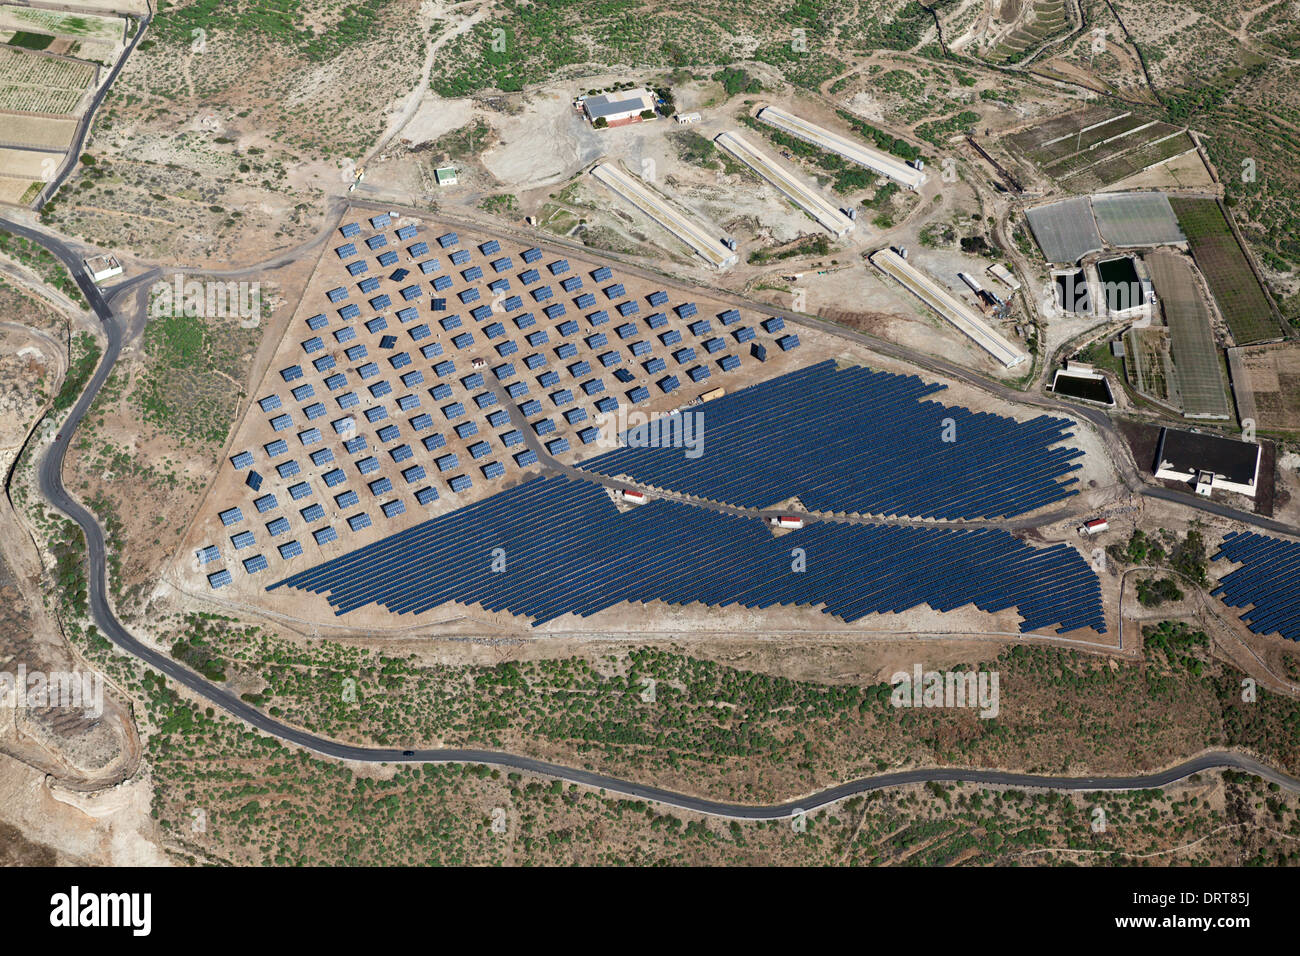 Aerial View of Solar Collectors near El Poris, Tenerife, Spain Stock Photo